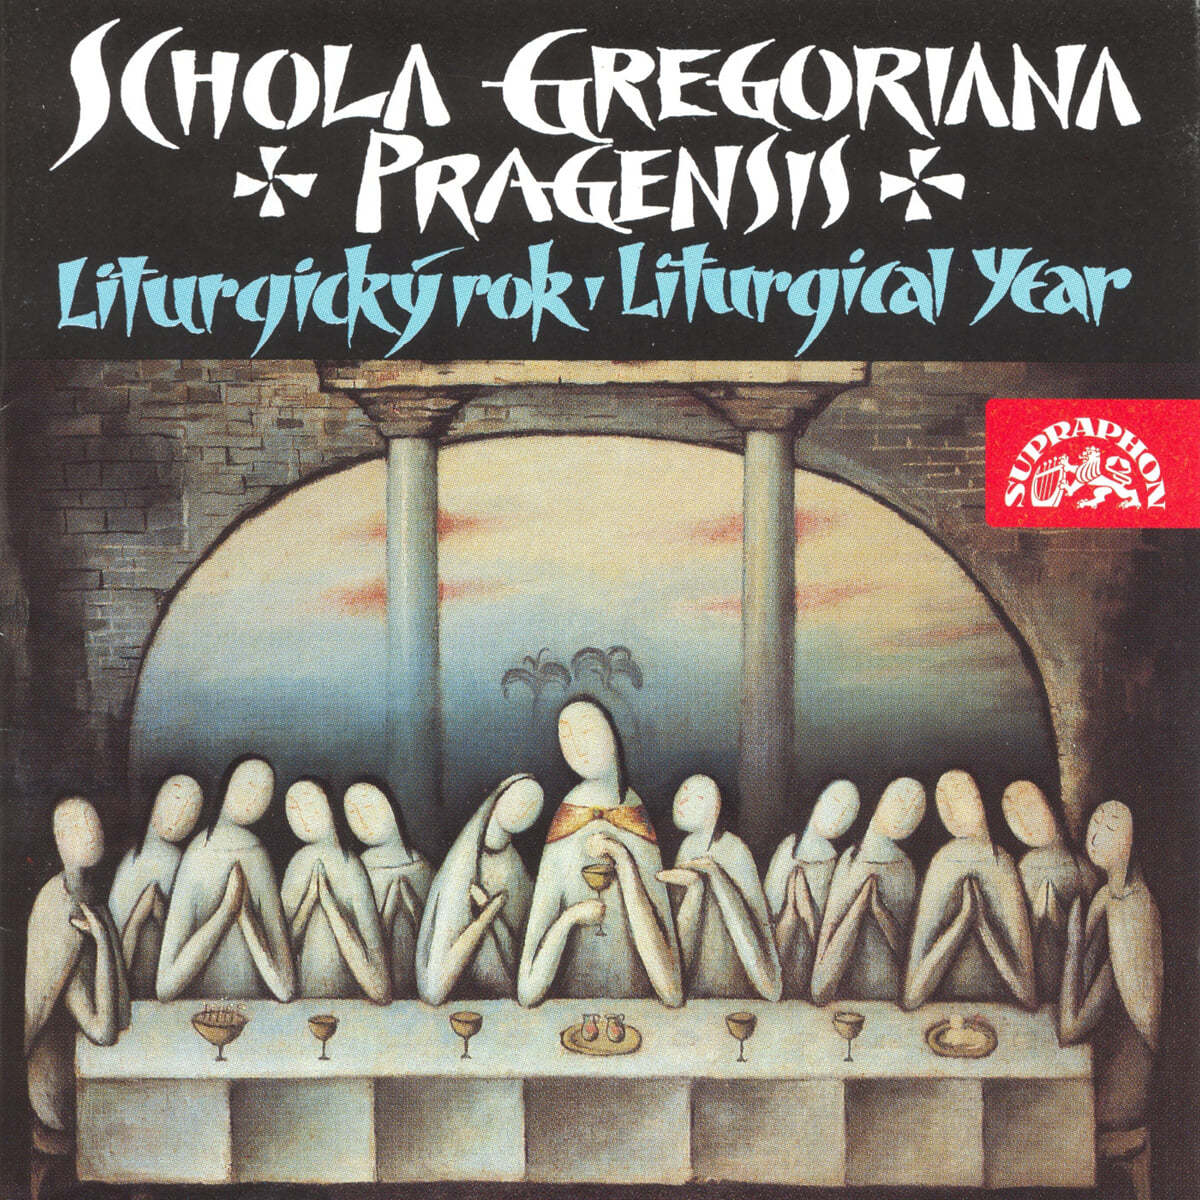 Schola Gregoriana Pragensis 전례력의 한 해 - 그레고리오 성가 (Liturgical Year - Gregorian Chant)